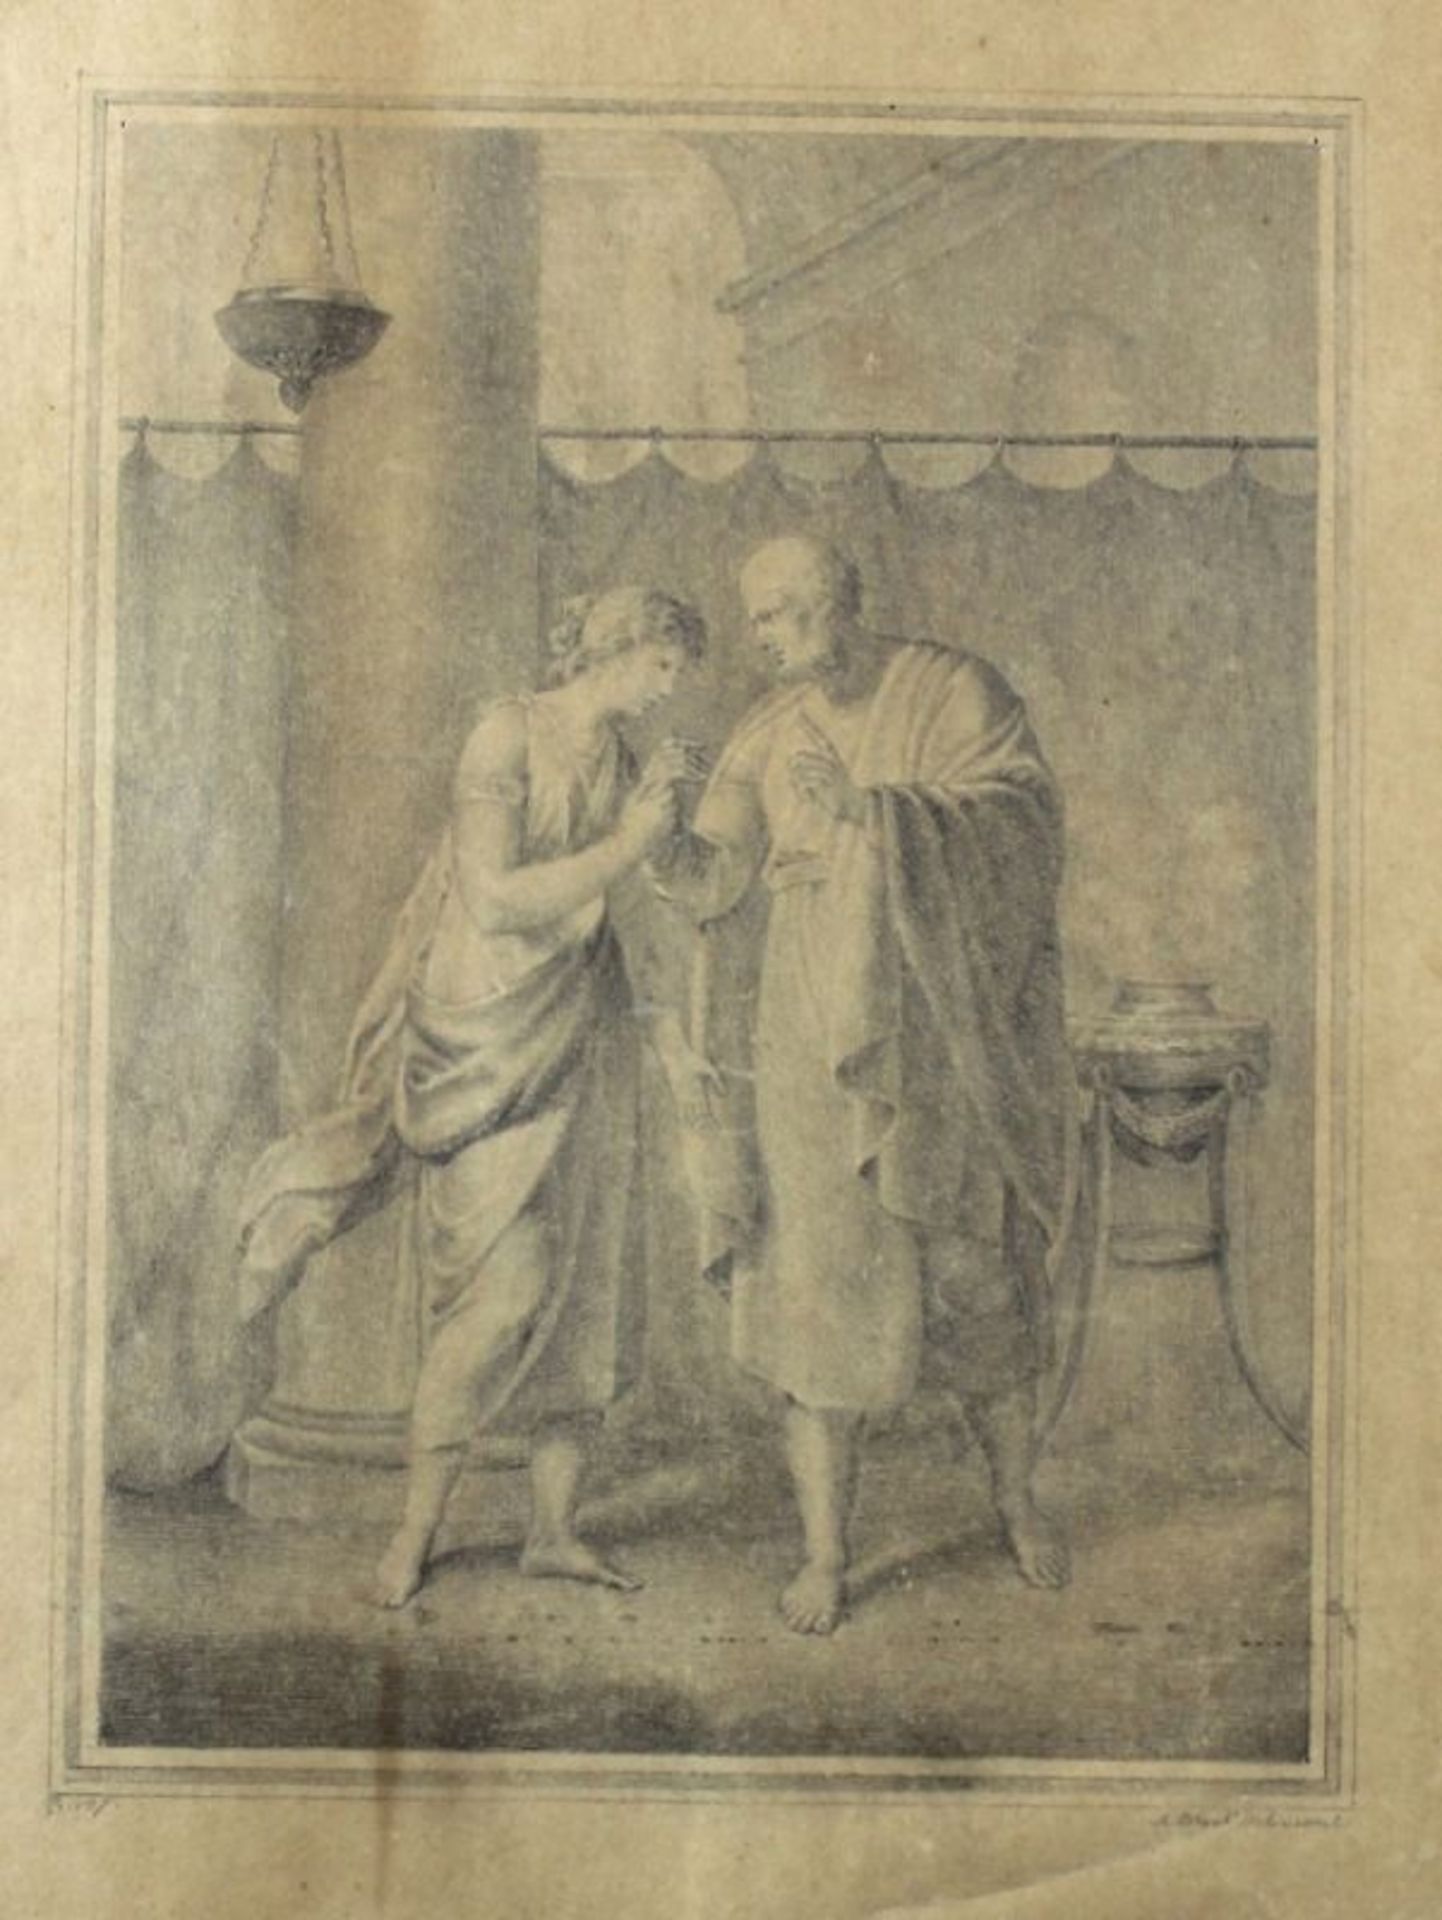 Zeichnung - A. Blank (19.Jahrhundert) "Antike Szene", r.u. signiert, datiert 1837, evtl.